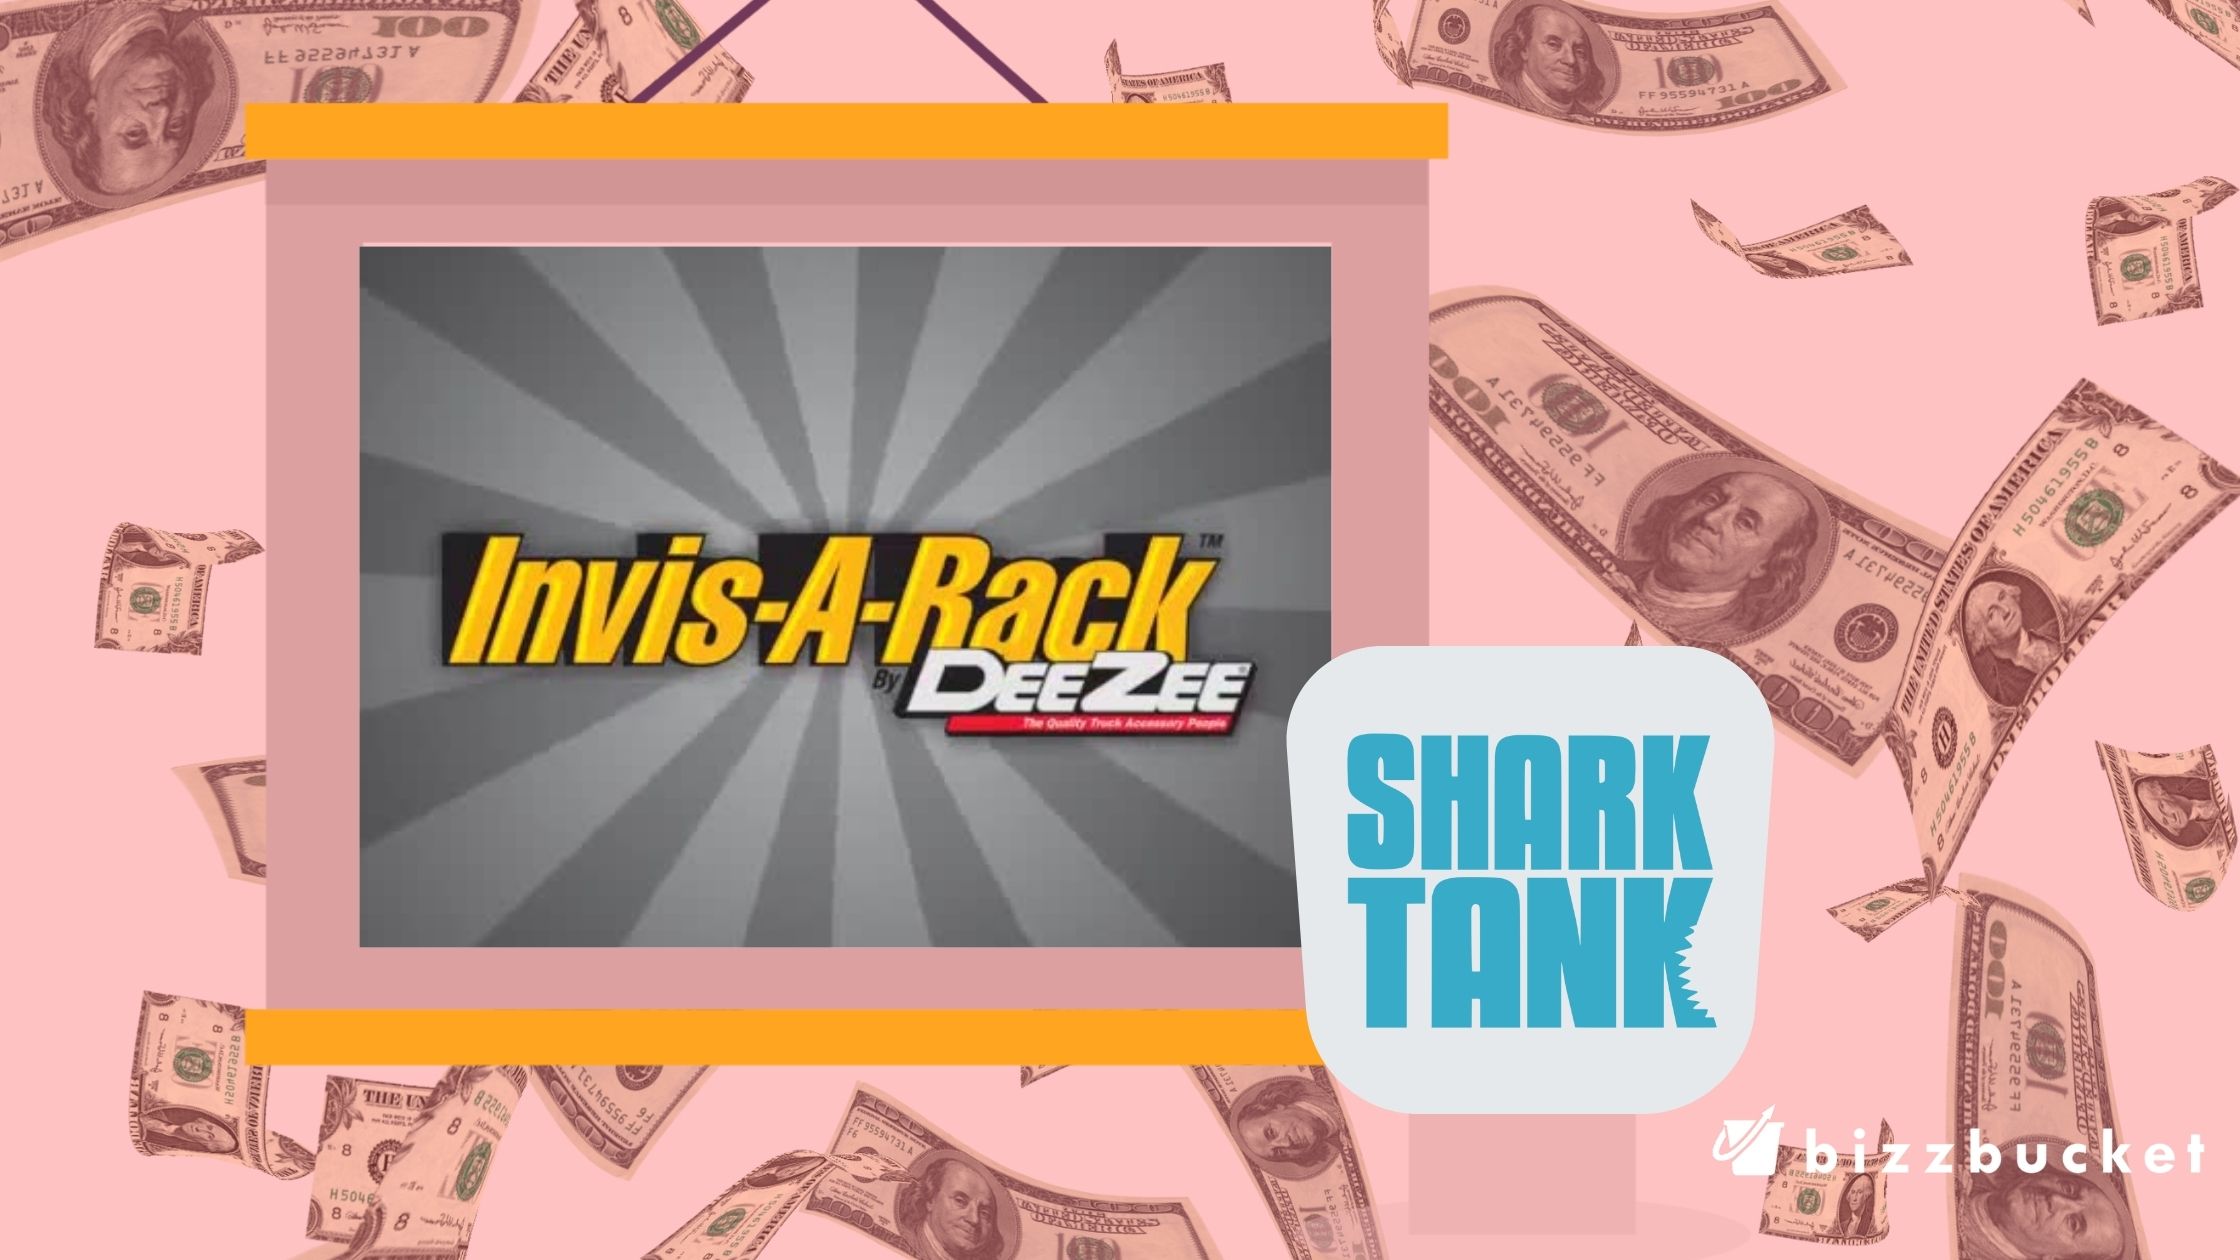 Invis A Rack shark tank update